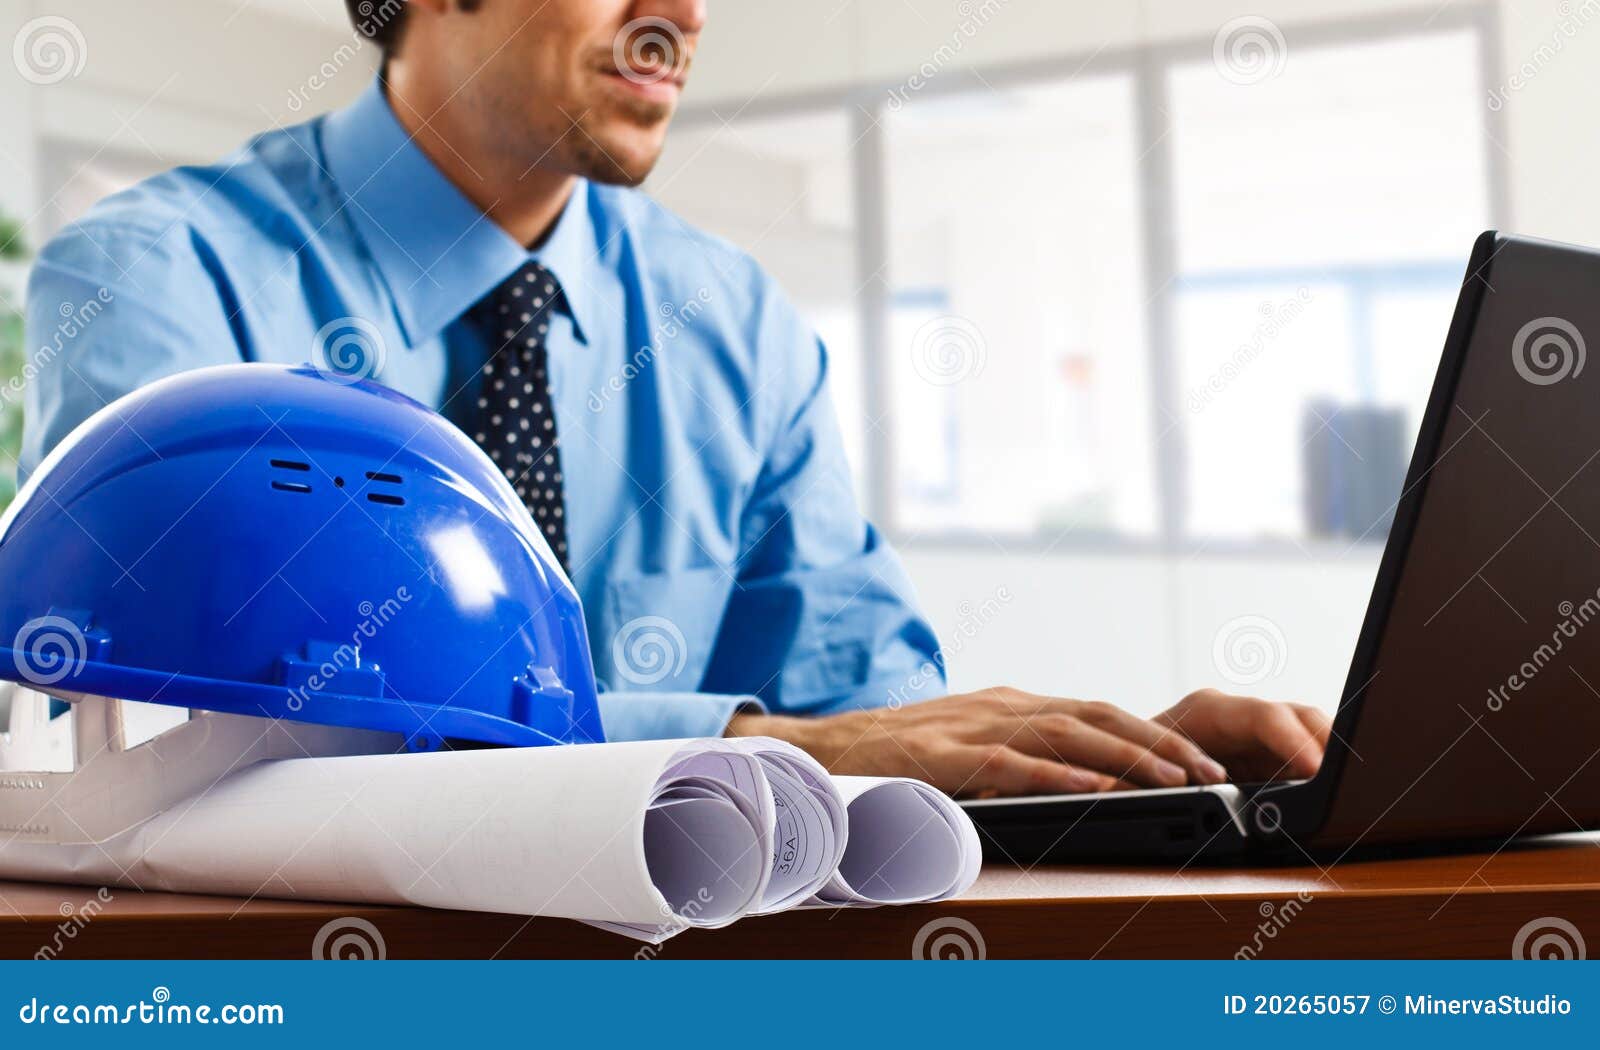 engineer using laptop